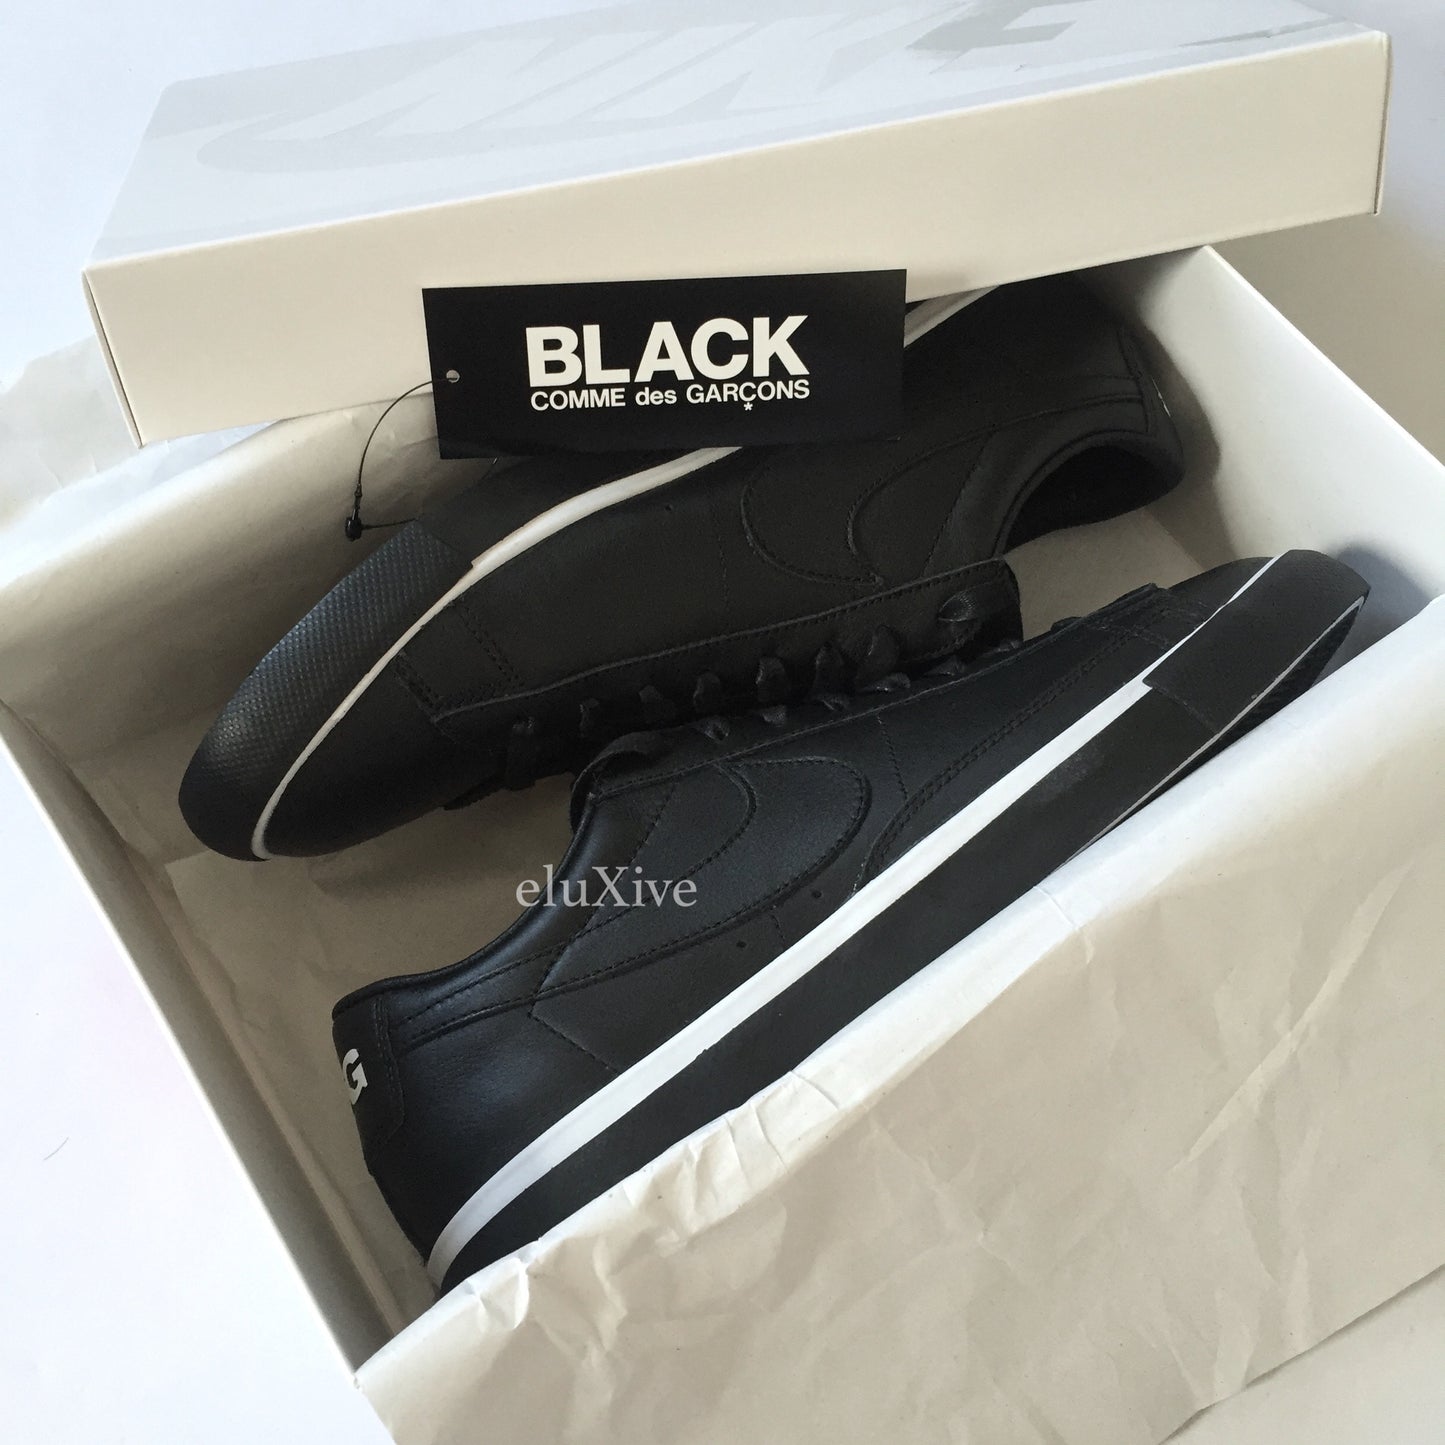 Comme des Garcons x Nike - Black Blazer Low CDG